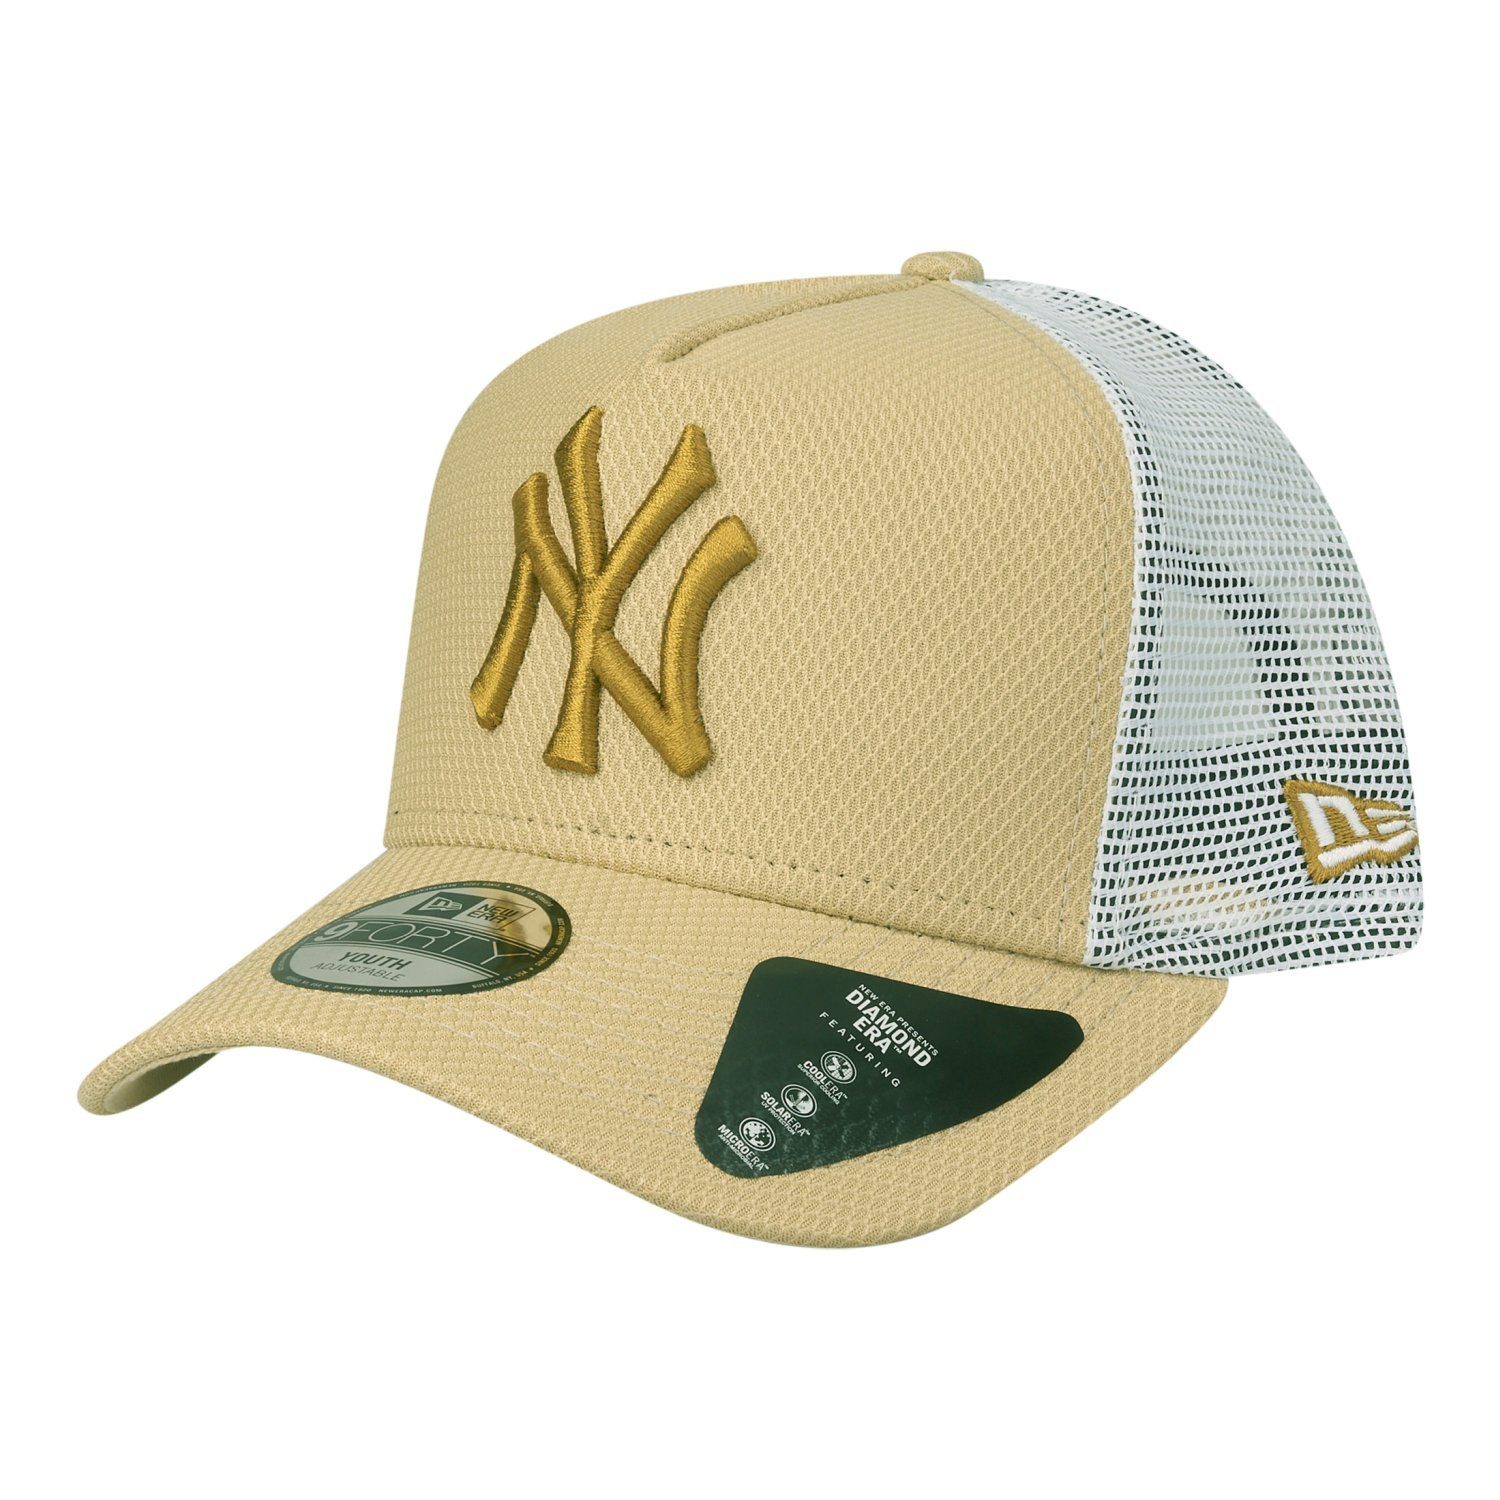 TRUCKER New Baseball Era Yankees Gold DIAMOND York New Cap